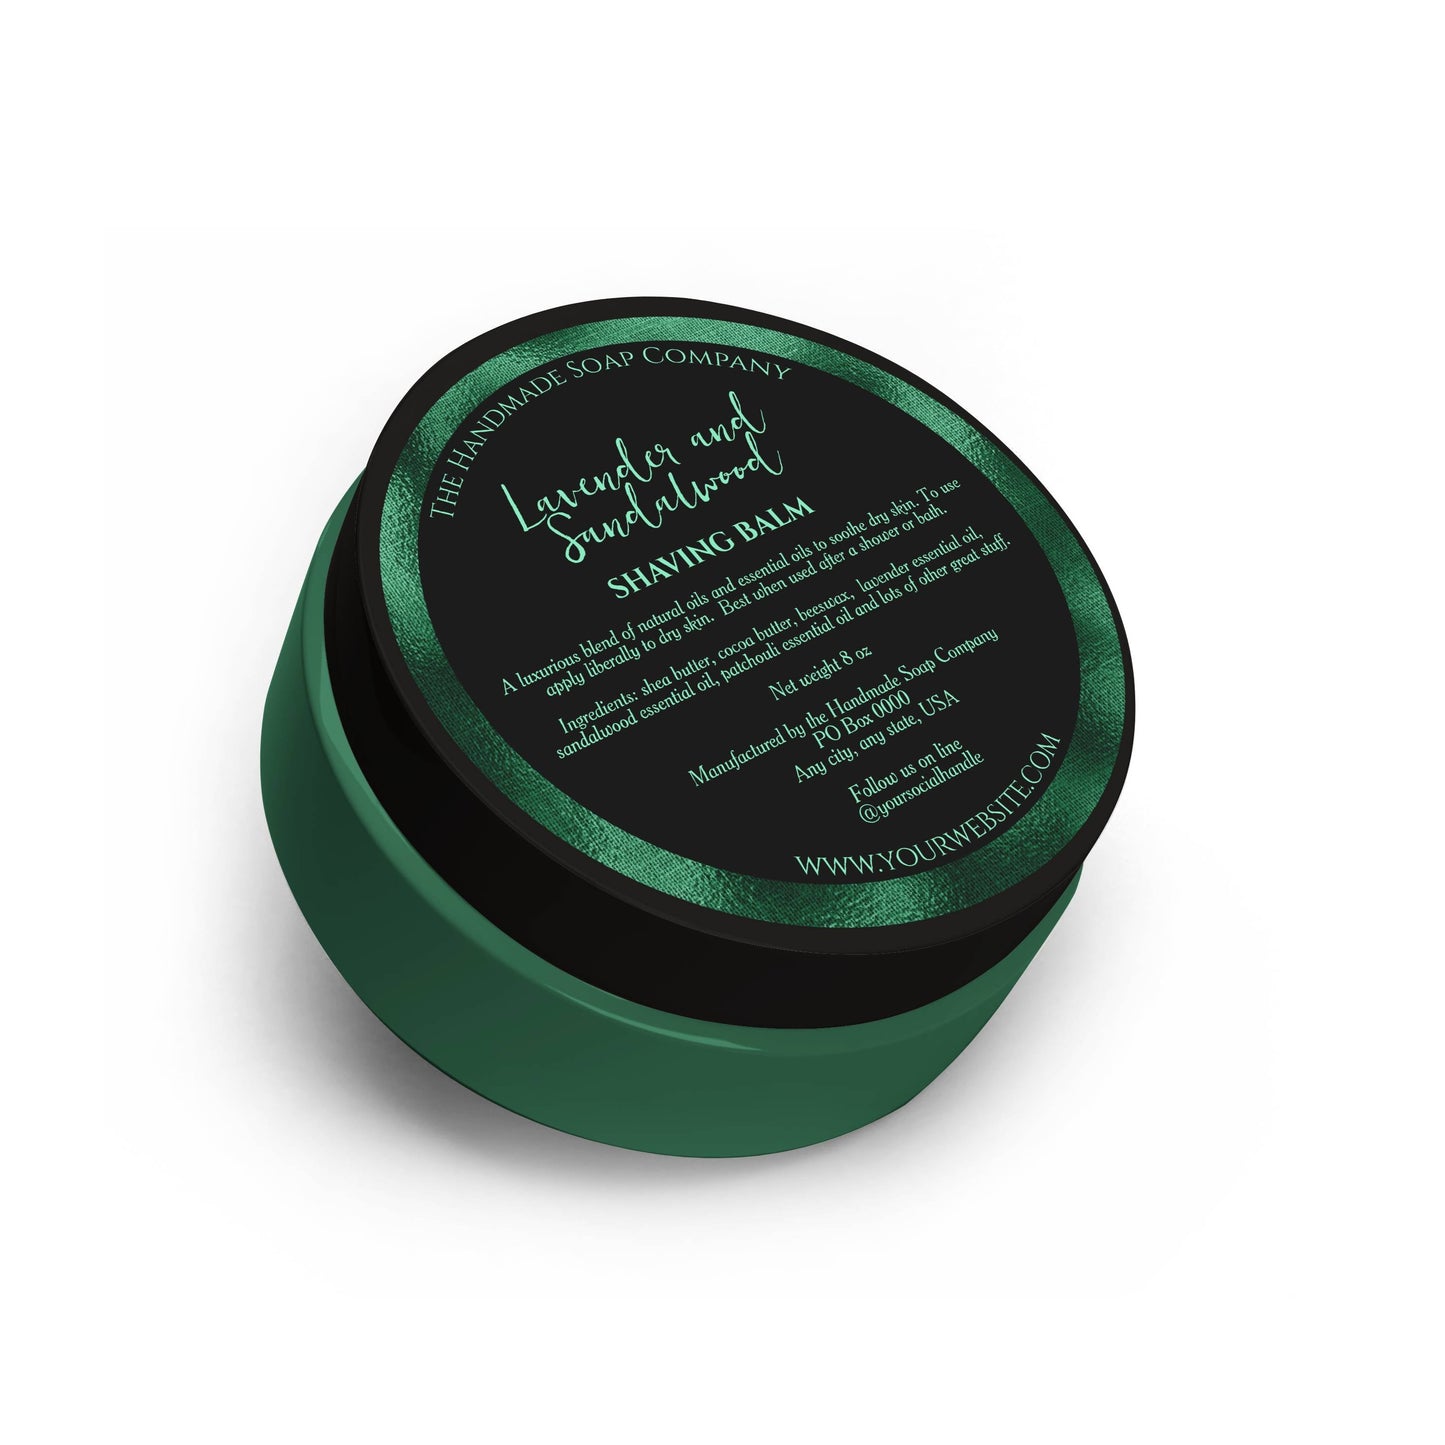 Black and Green Cosmetics Jar Label with Ingredients - 3” diameter